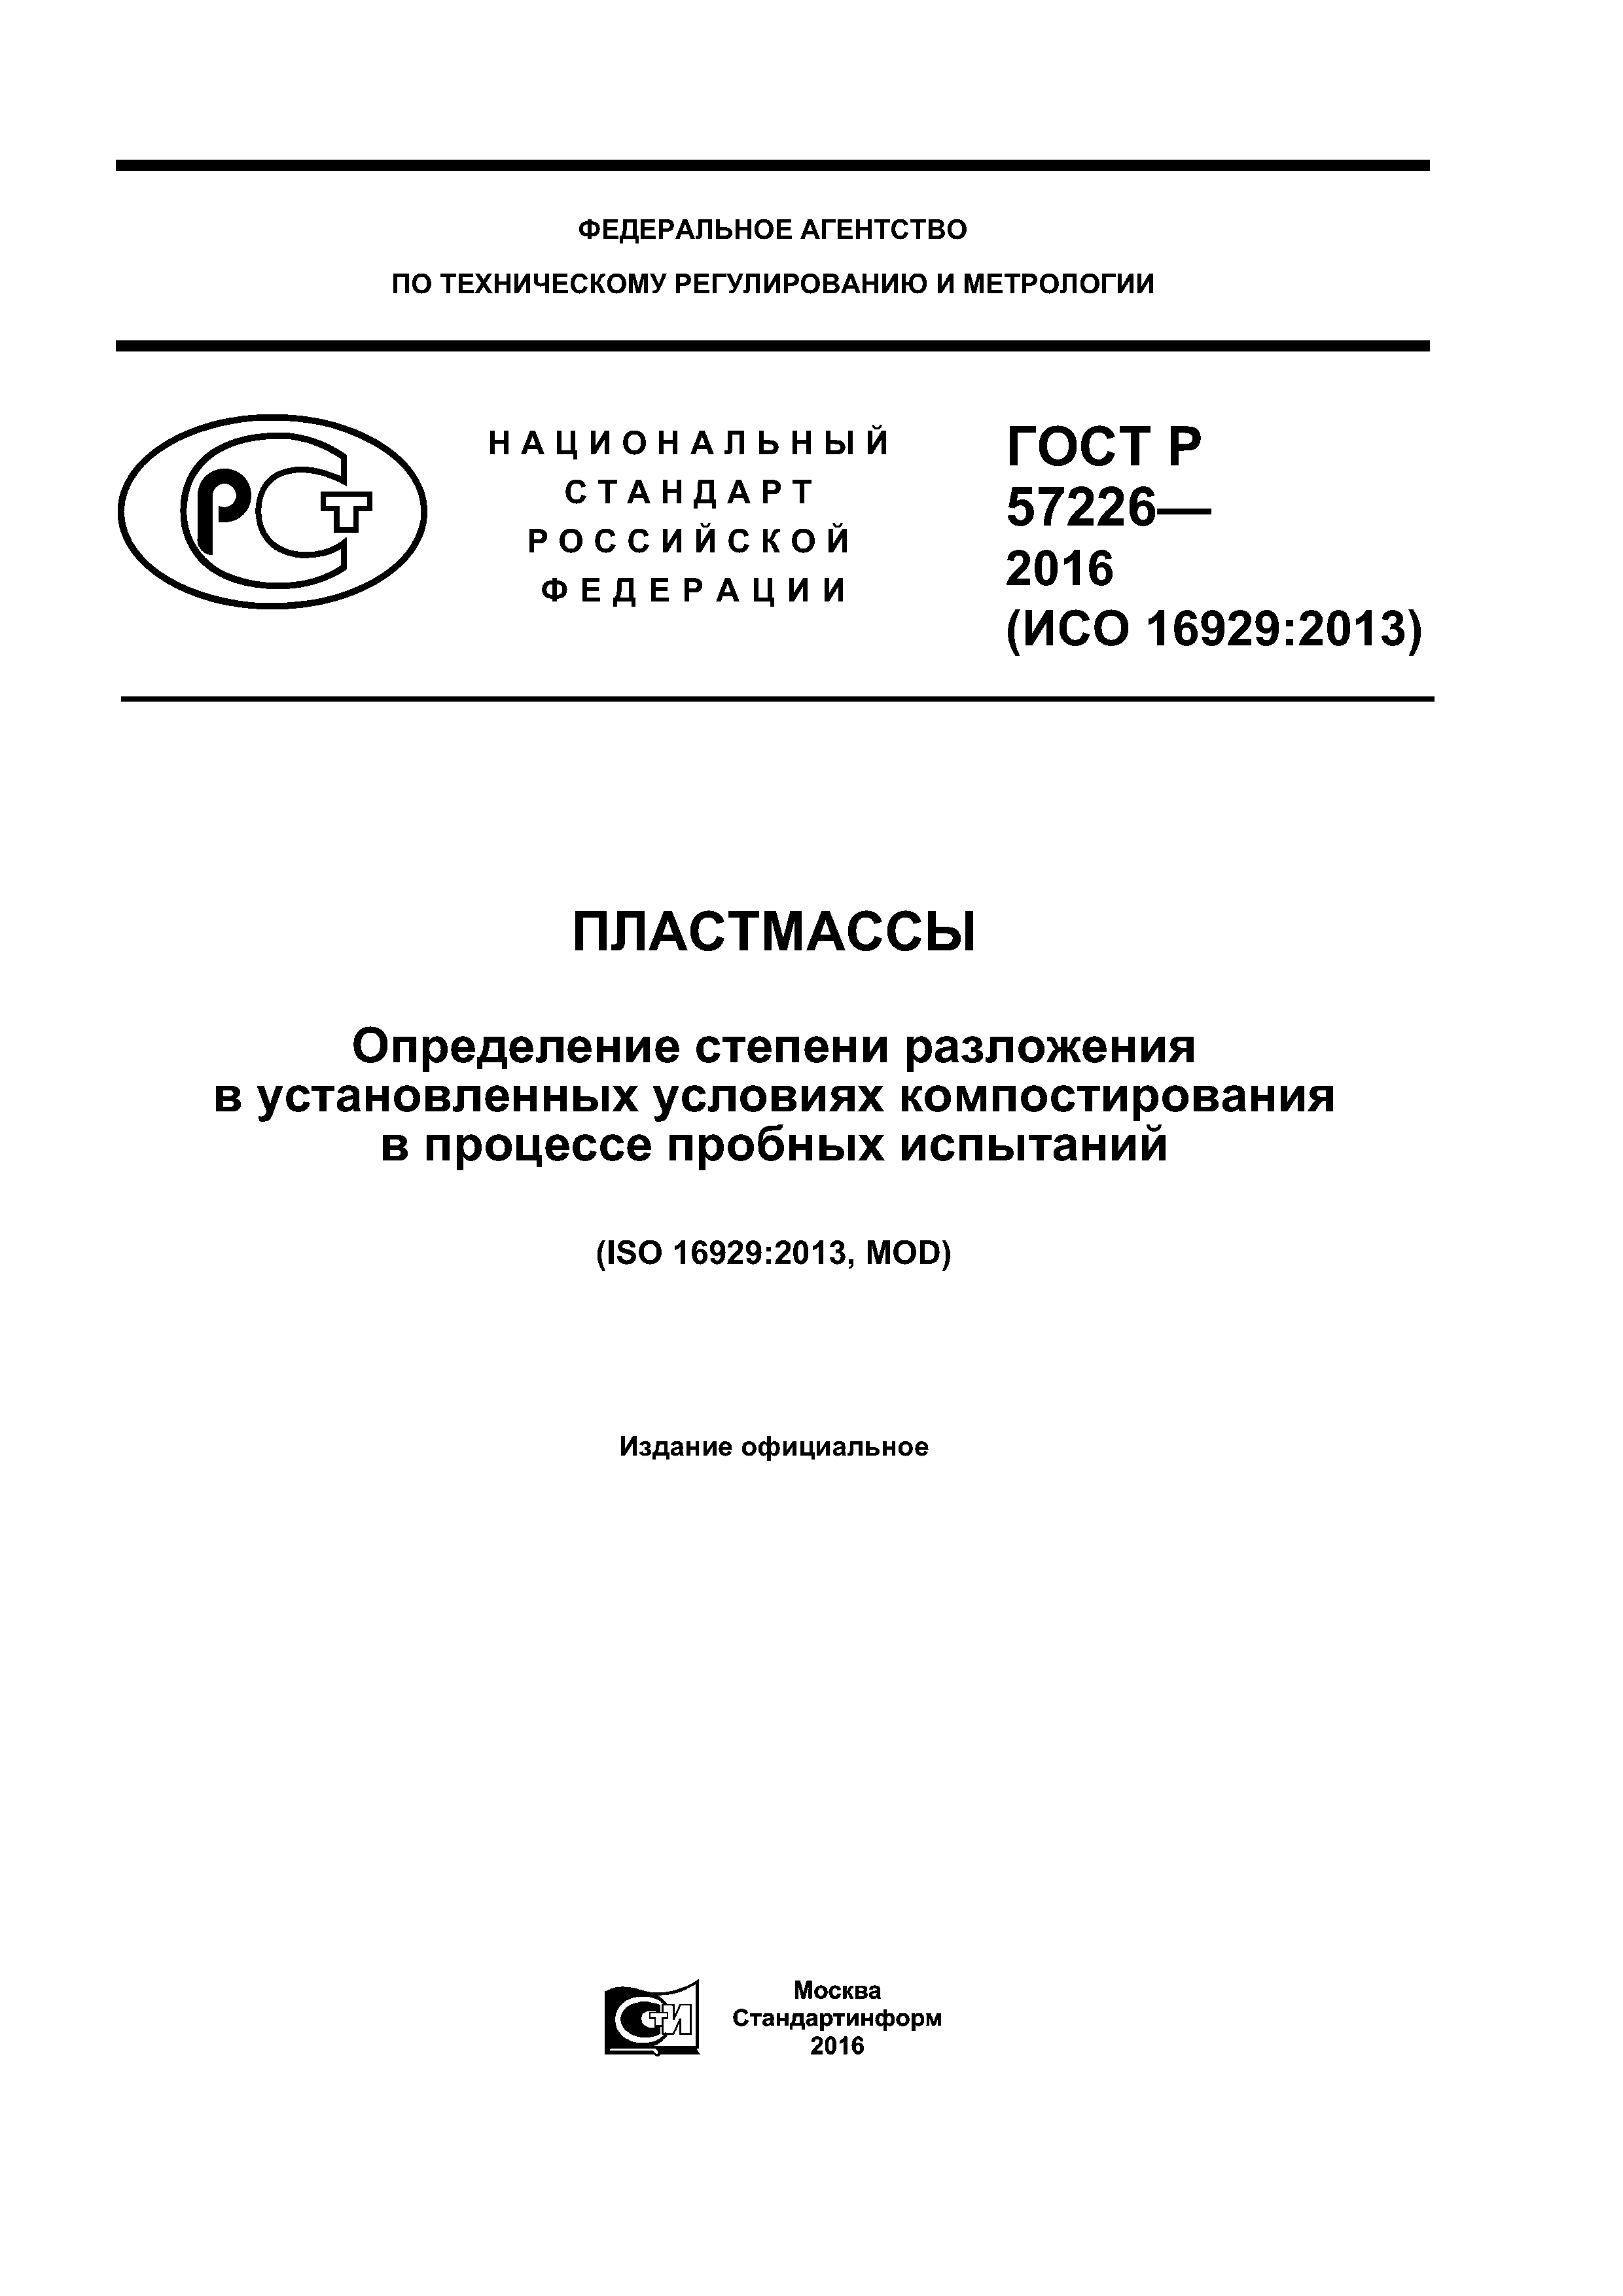 ГОСТ Р 57226-2016